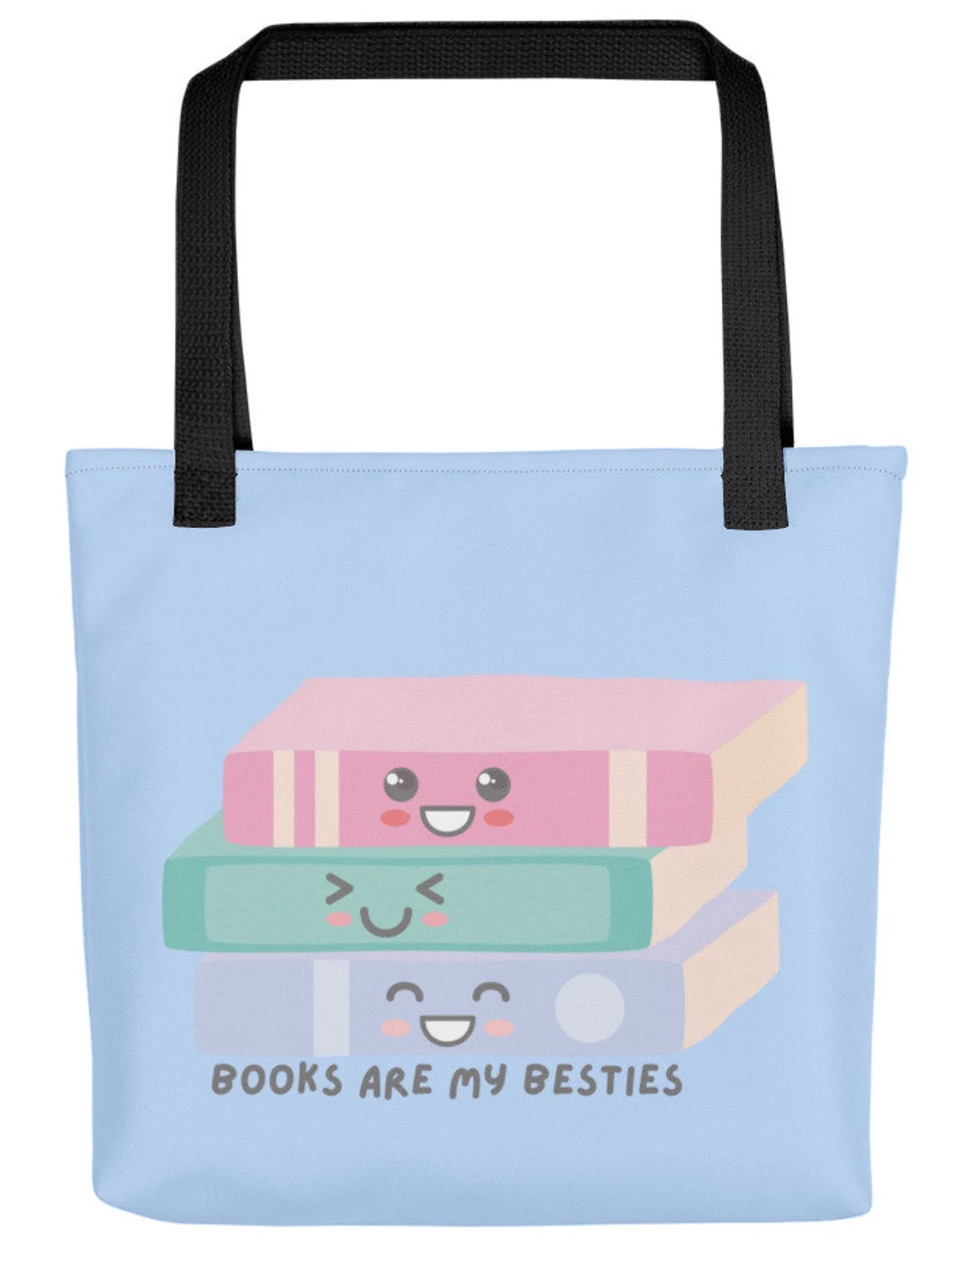 books are my besties tote bag